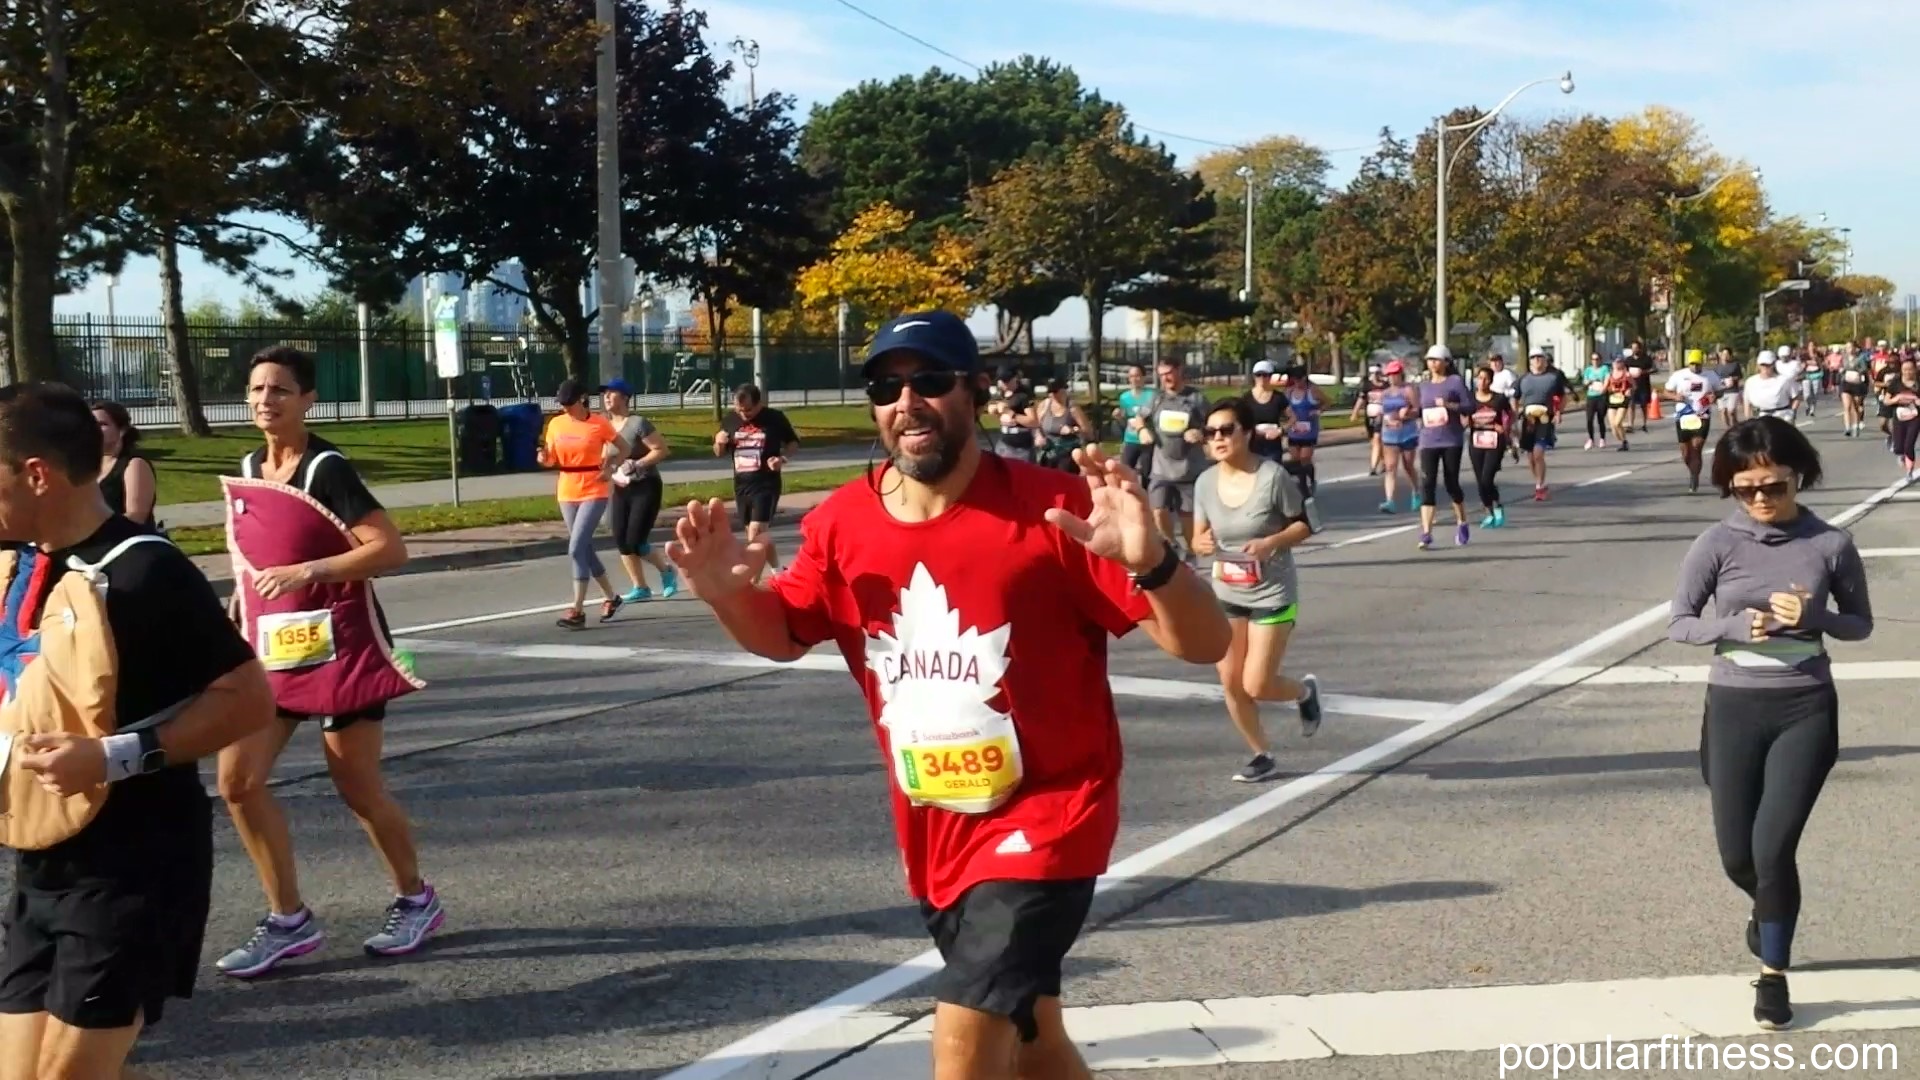 running a marathon in autumn - photo by popular fitness